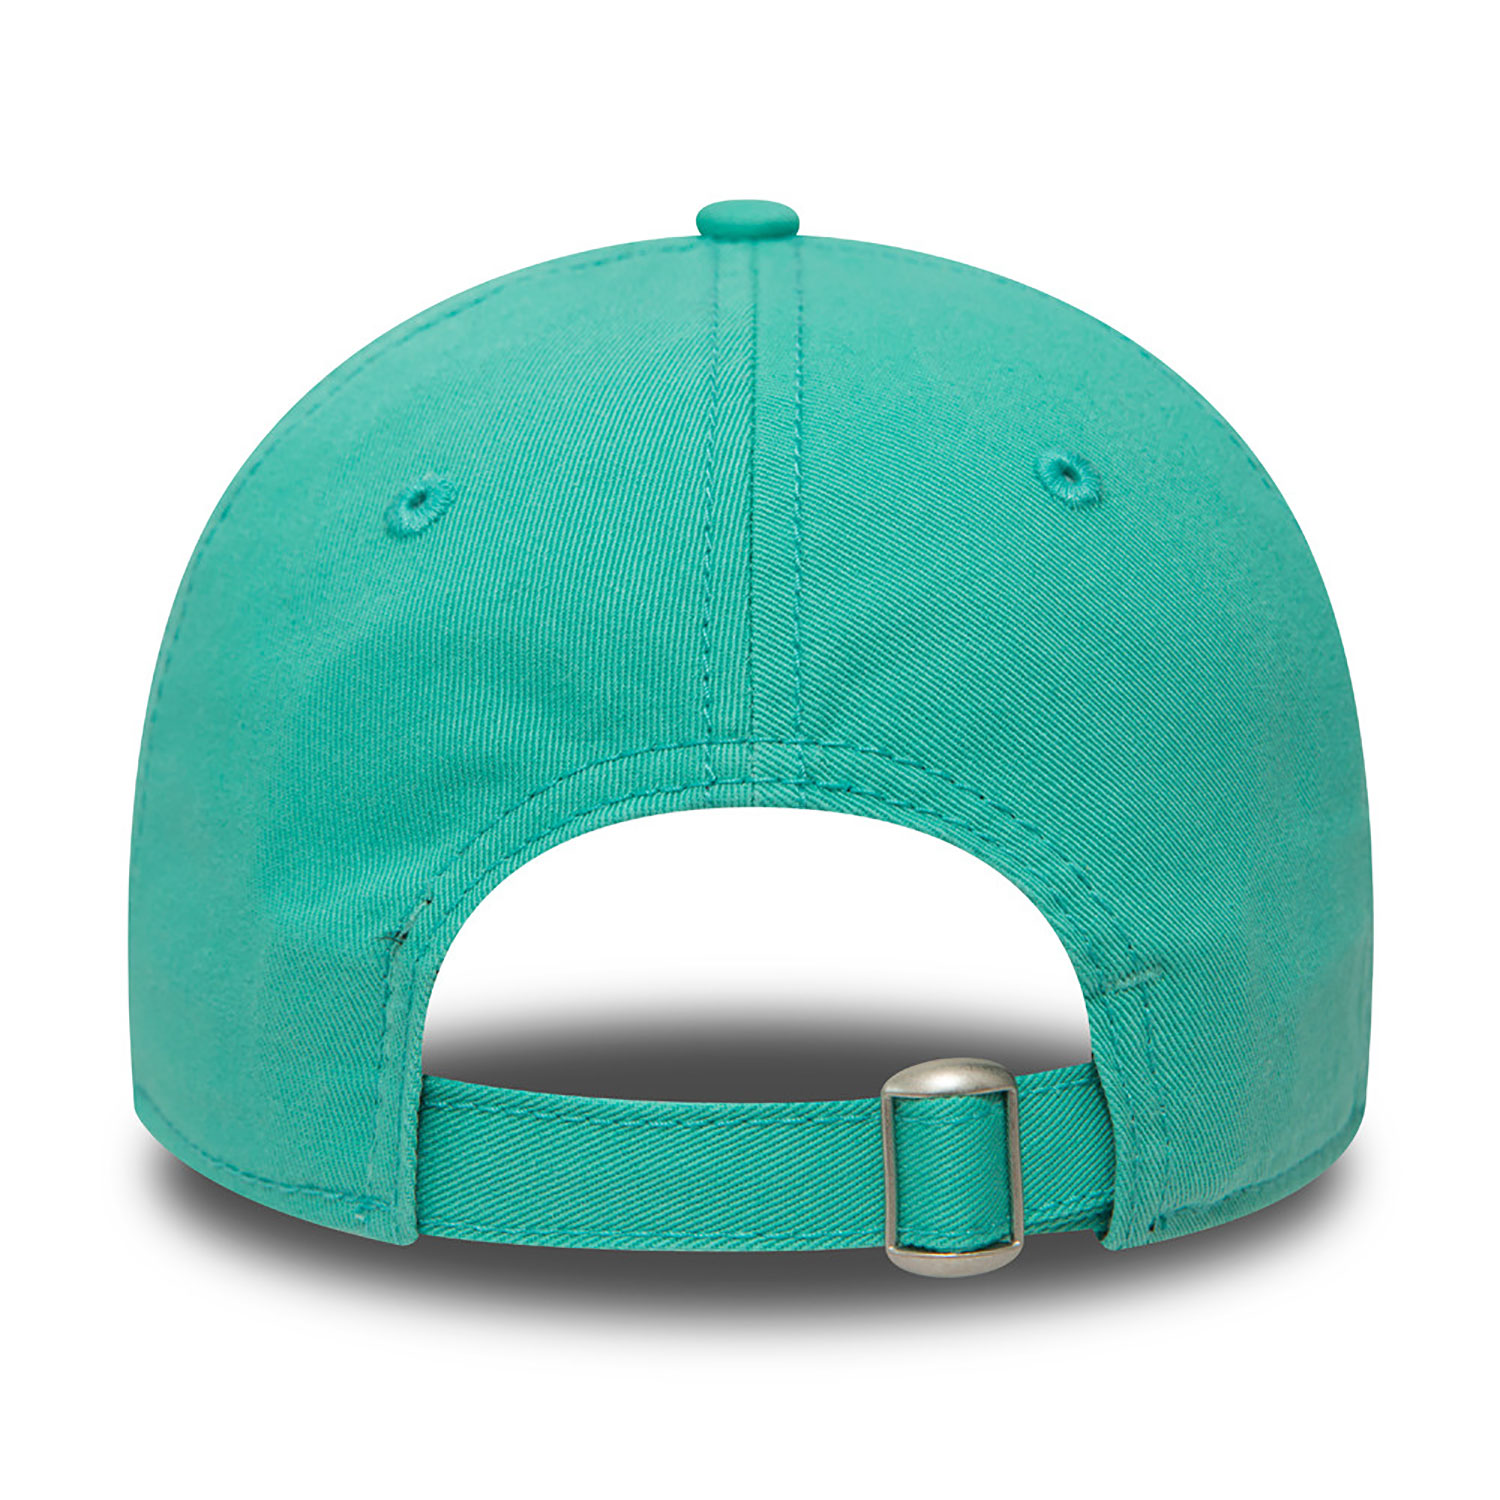 Türkise LA Dodgers Micro Logo Pastel 9TWENTY Verstellbare Cap